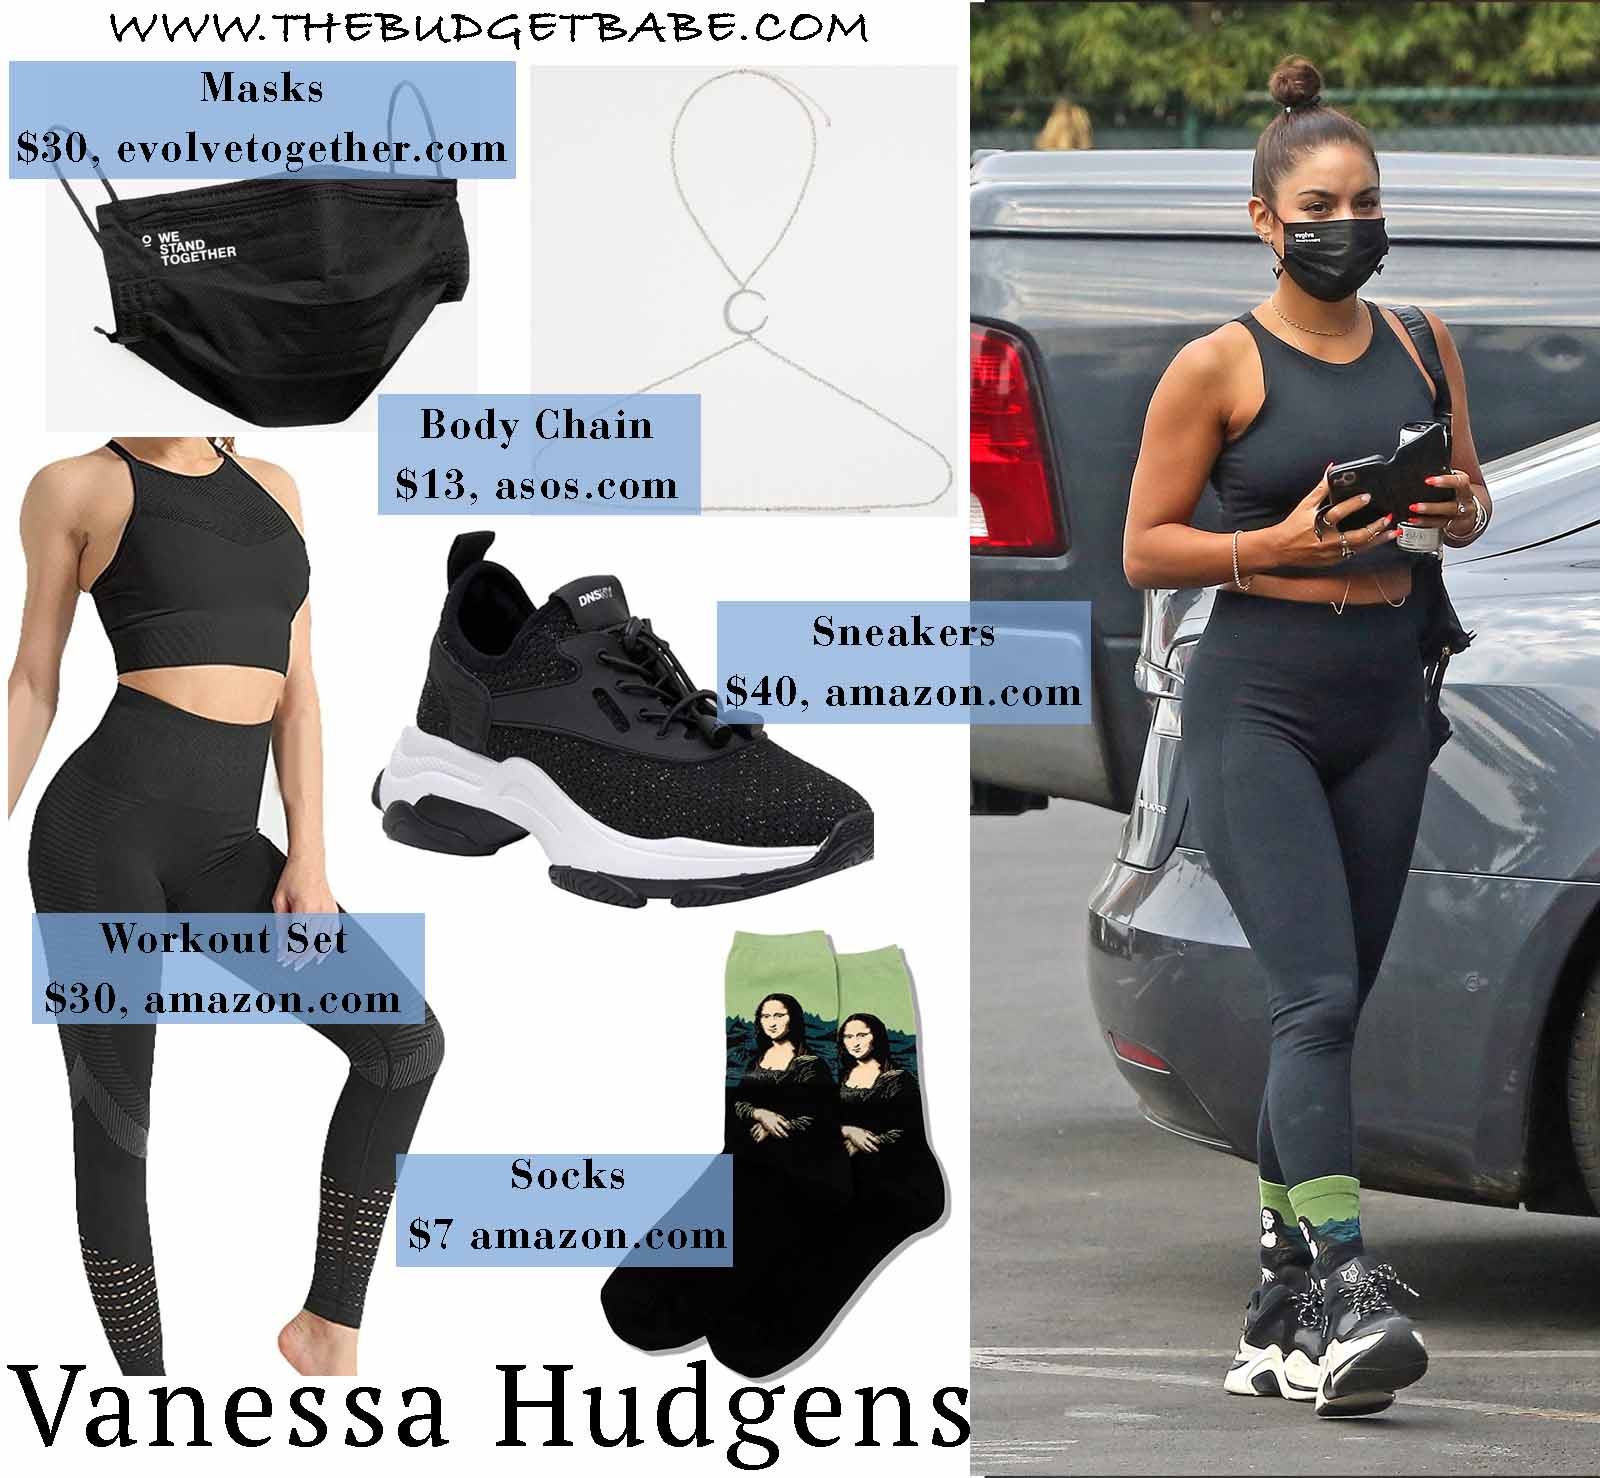 Vanessa Hudgens styles up her workout wear!